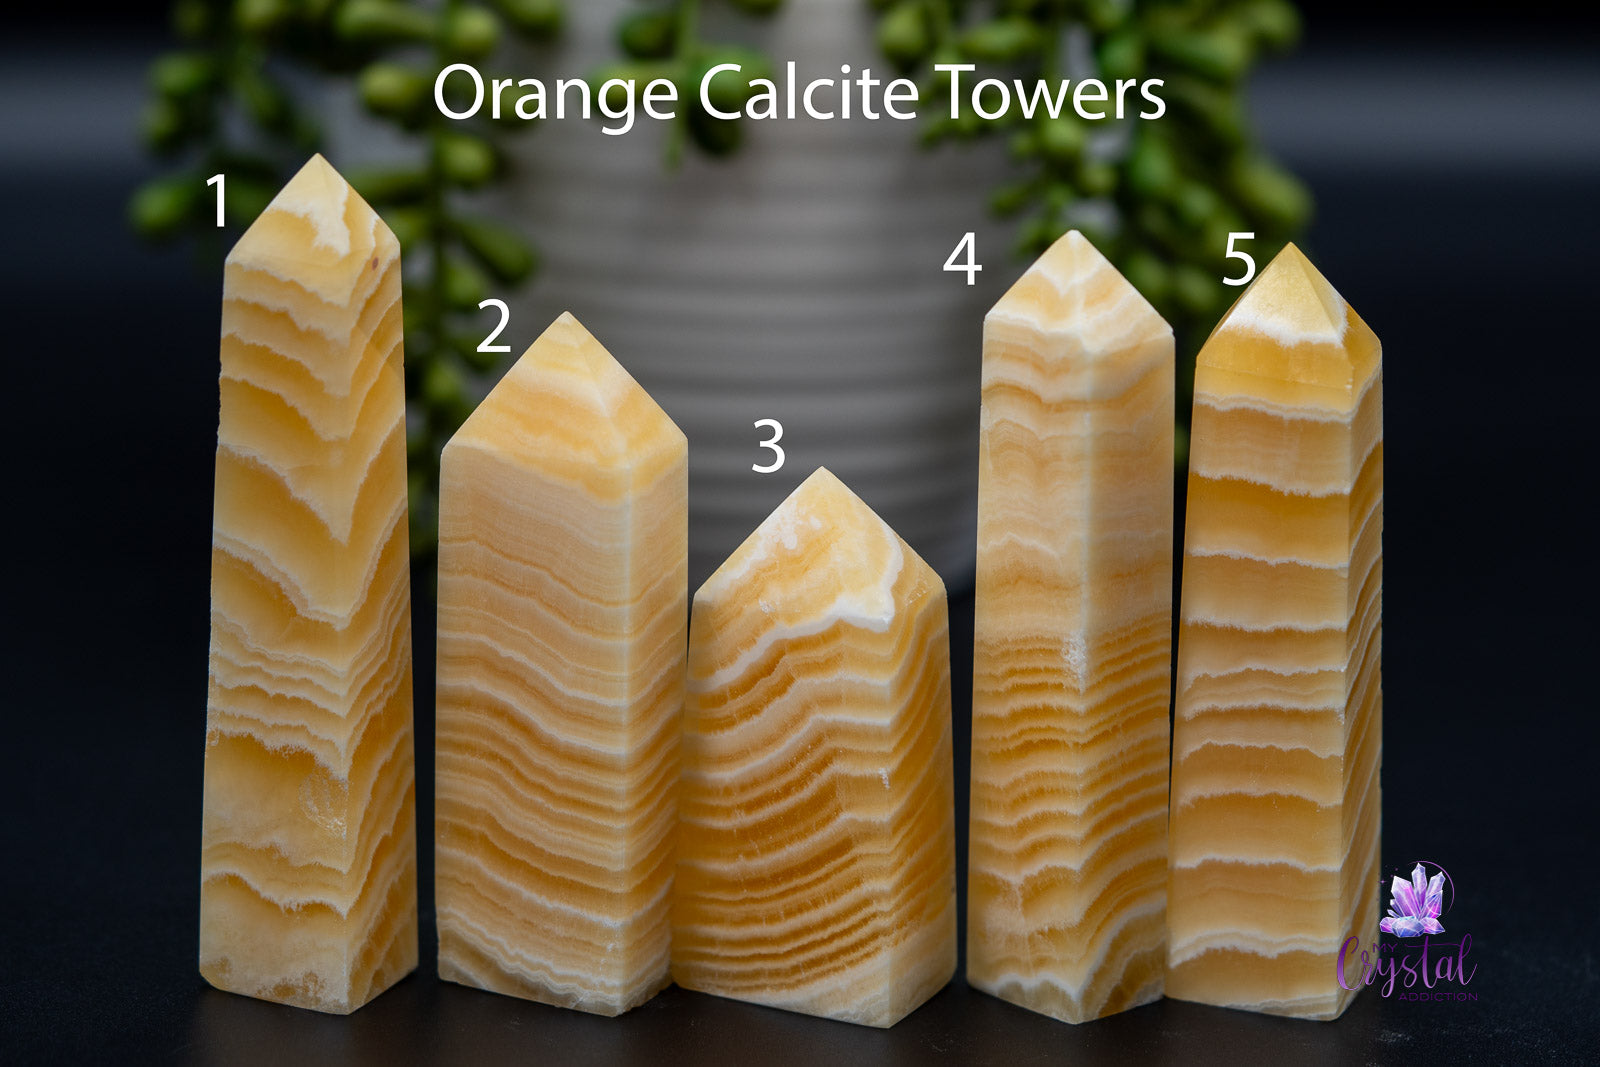 Orange Calcite Tower 2.7"-4.6"/68mm-118mm - My Crystal Addiction